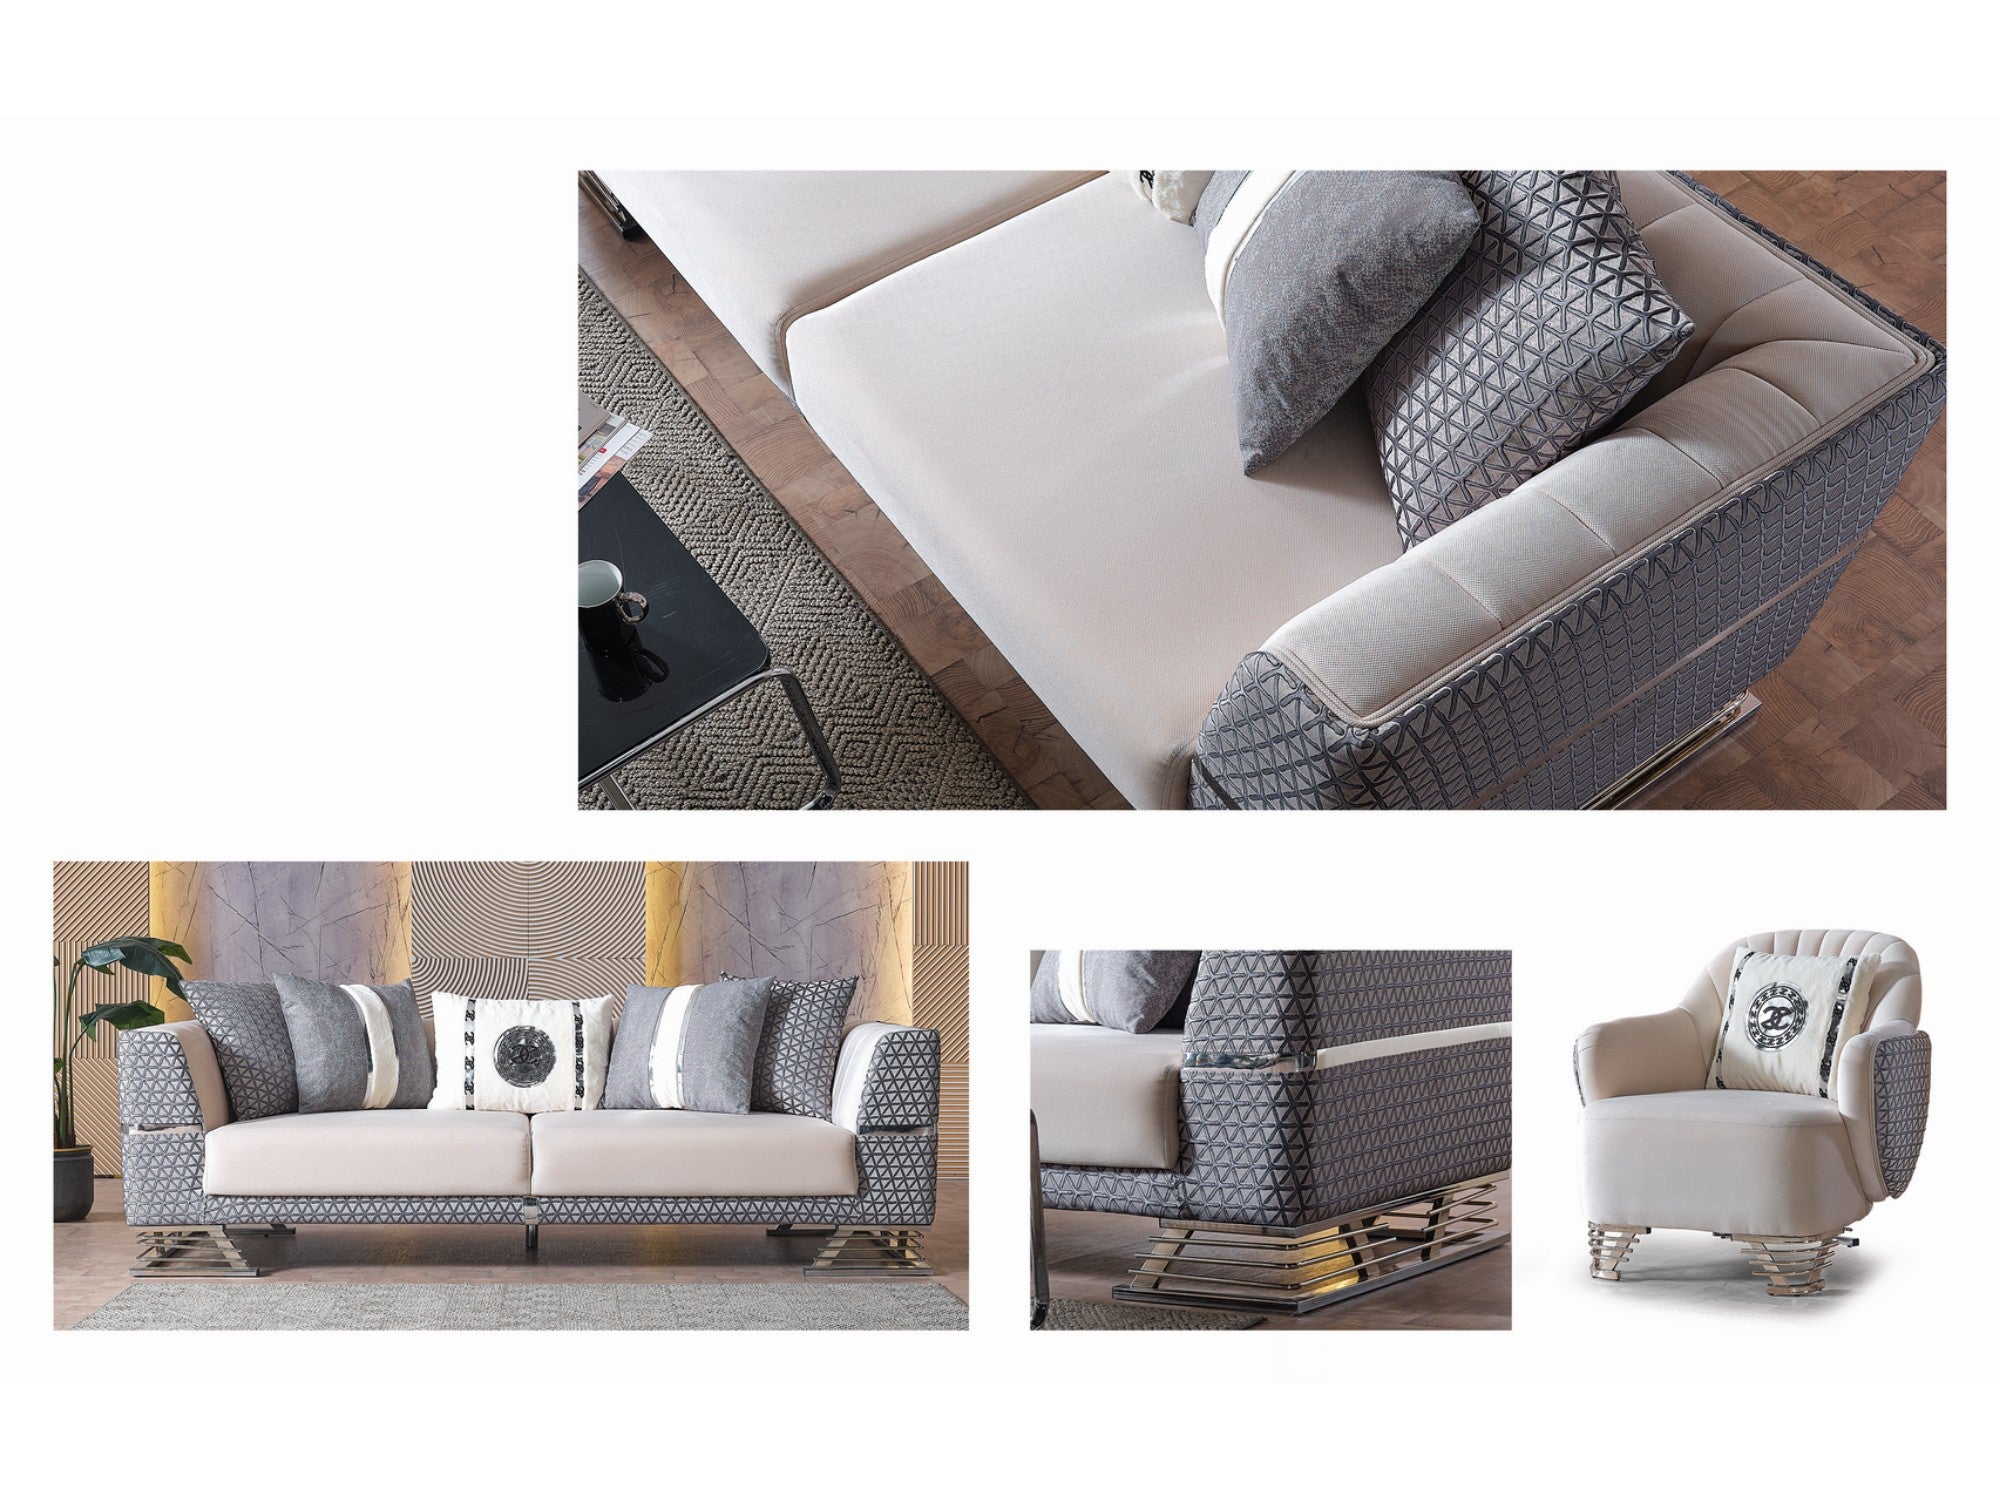 Luxury Royal Stationary Sofa